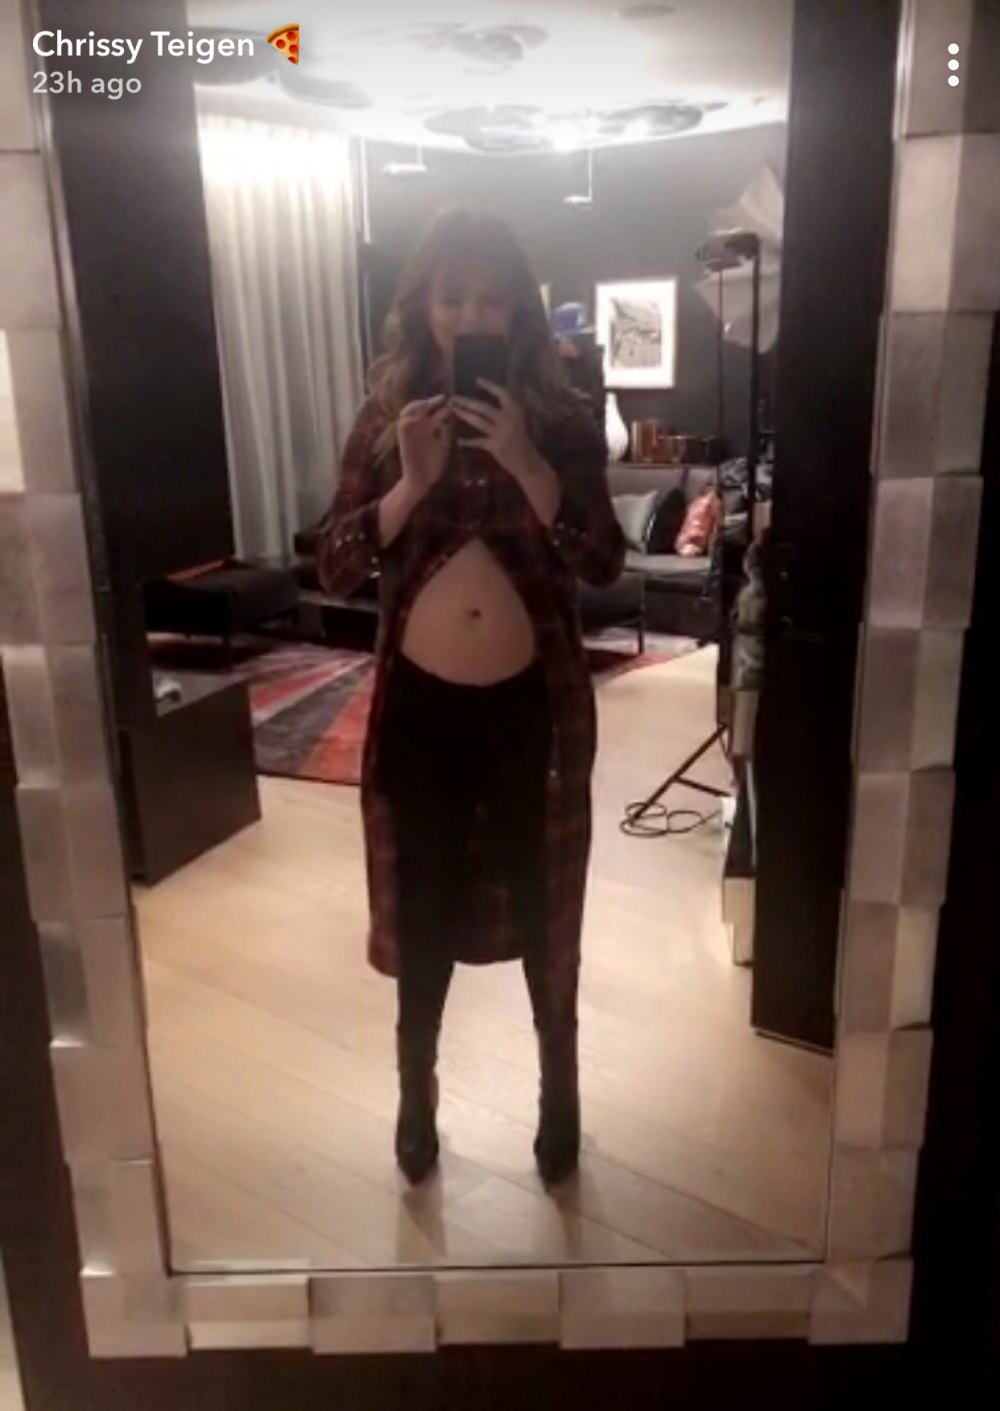 Chrissy Teigen displays her baby bump on Snapchat.